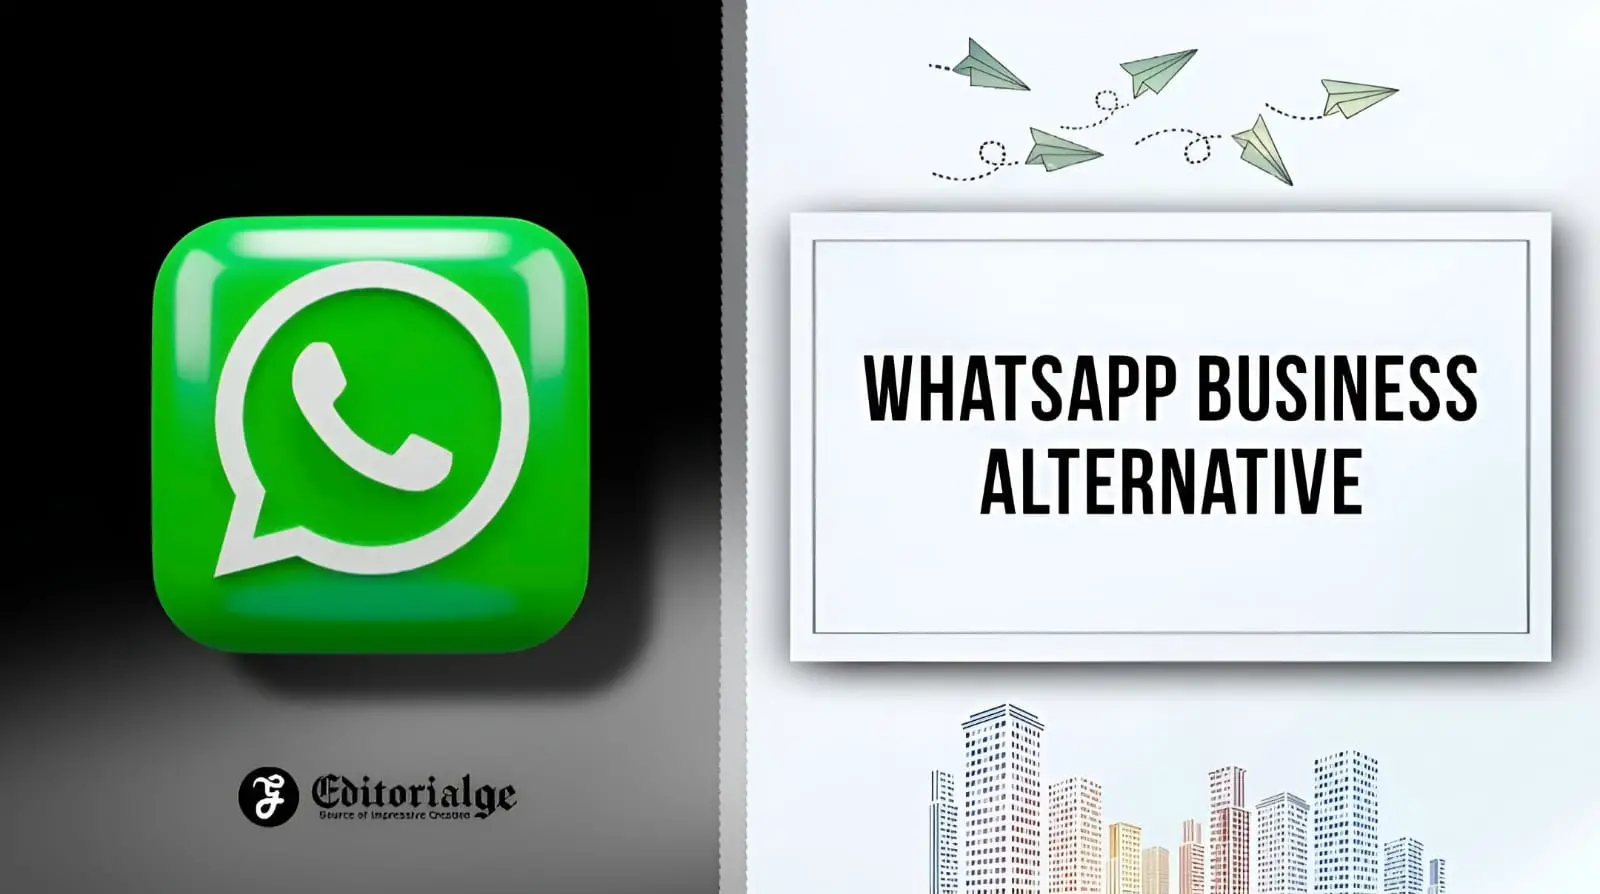 Whatsapp business alternative